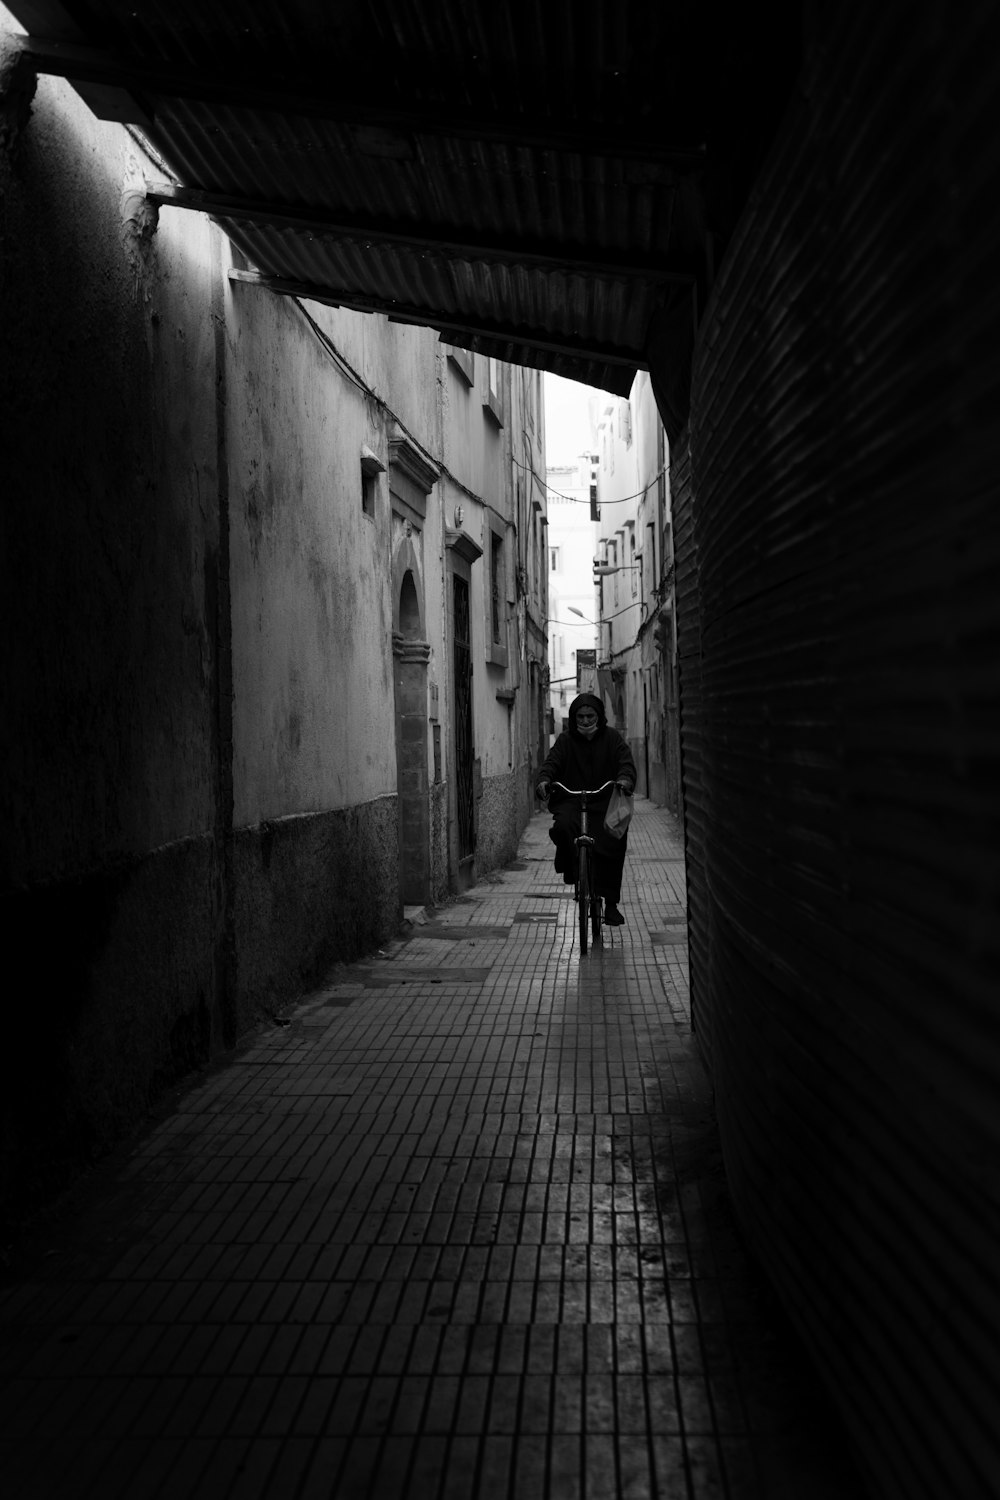 a person riding a bike down a dark alley way